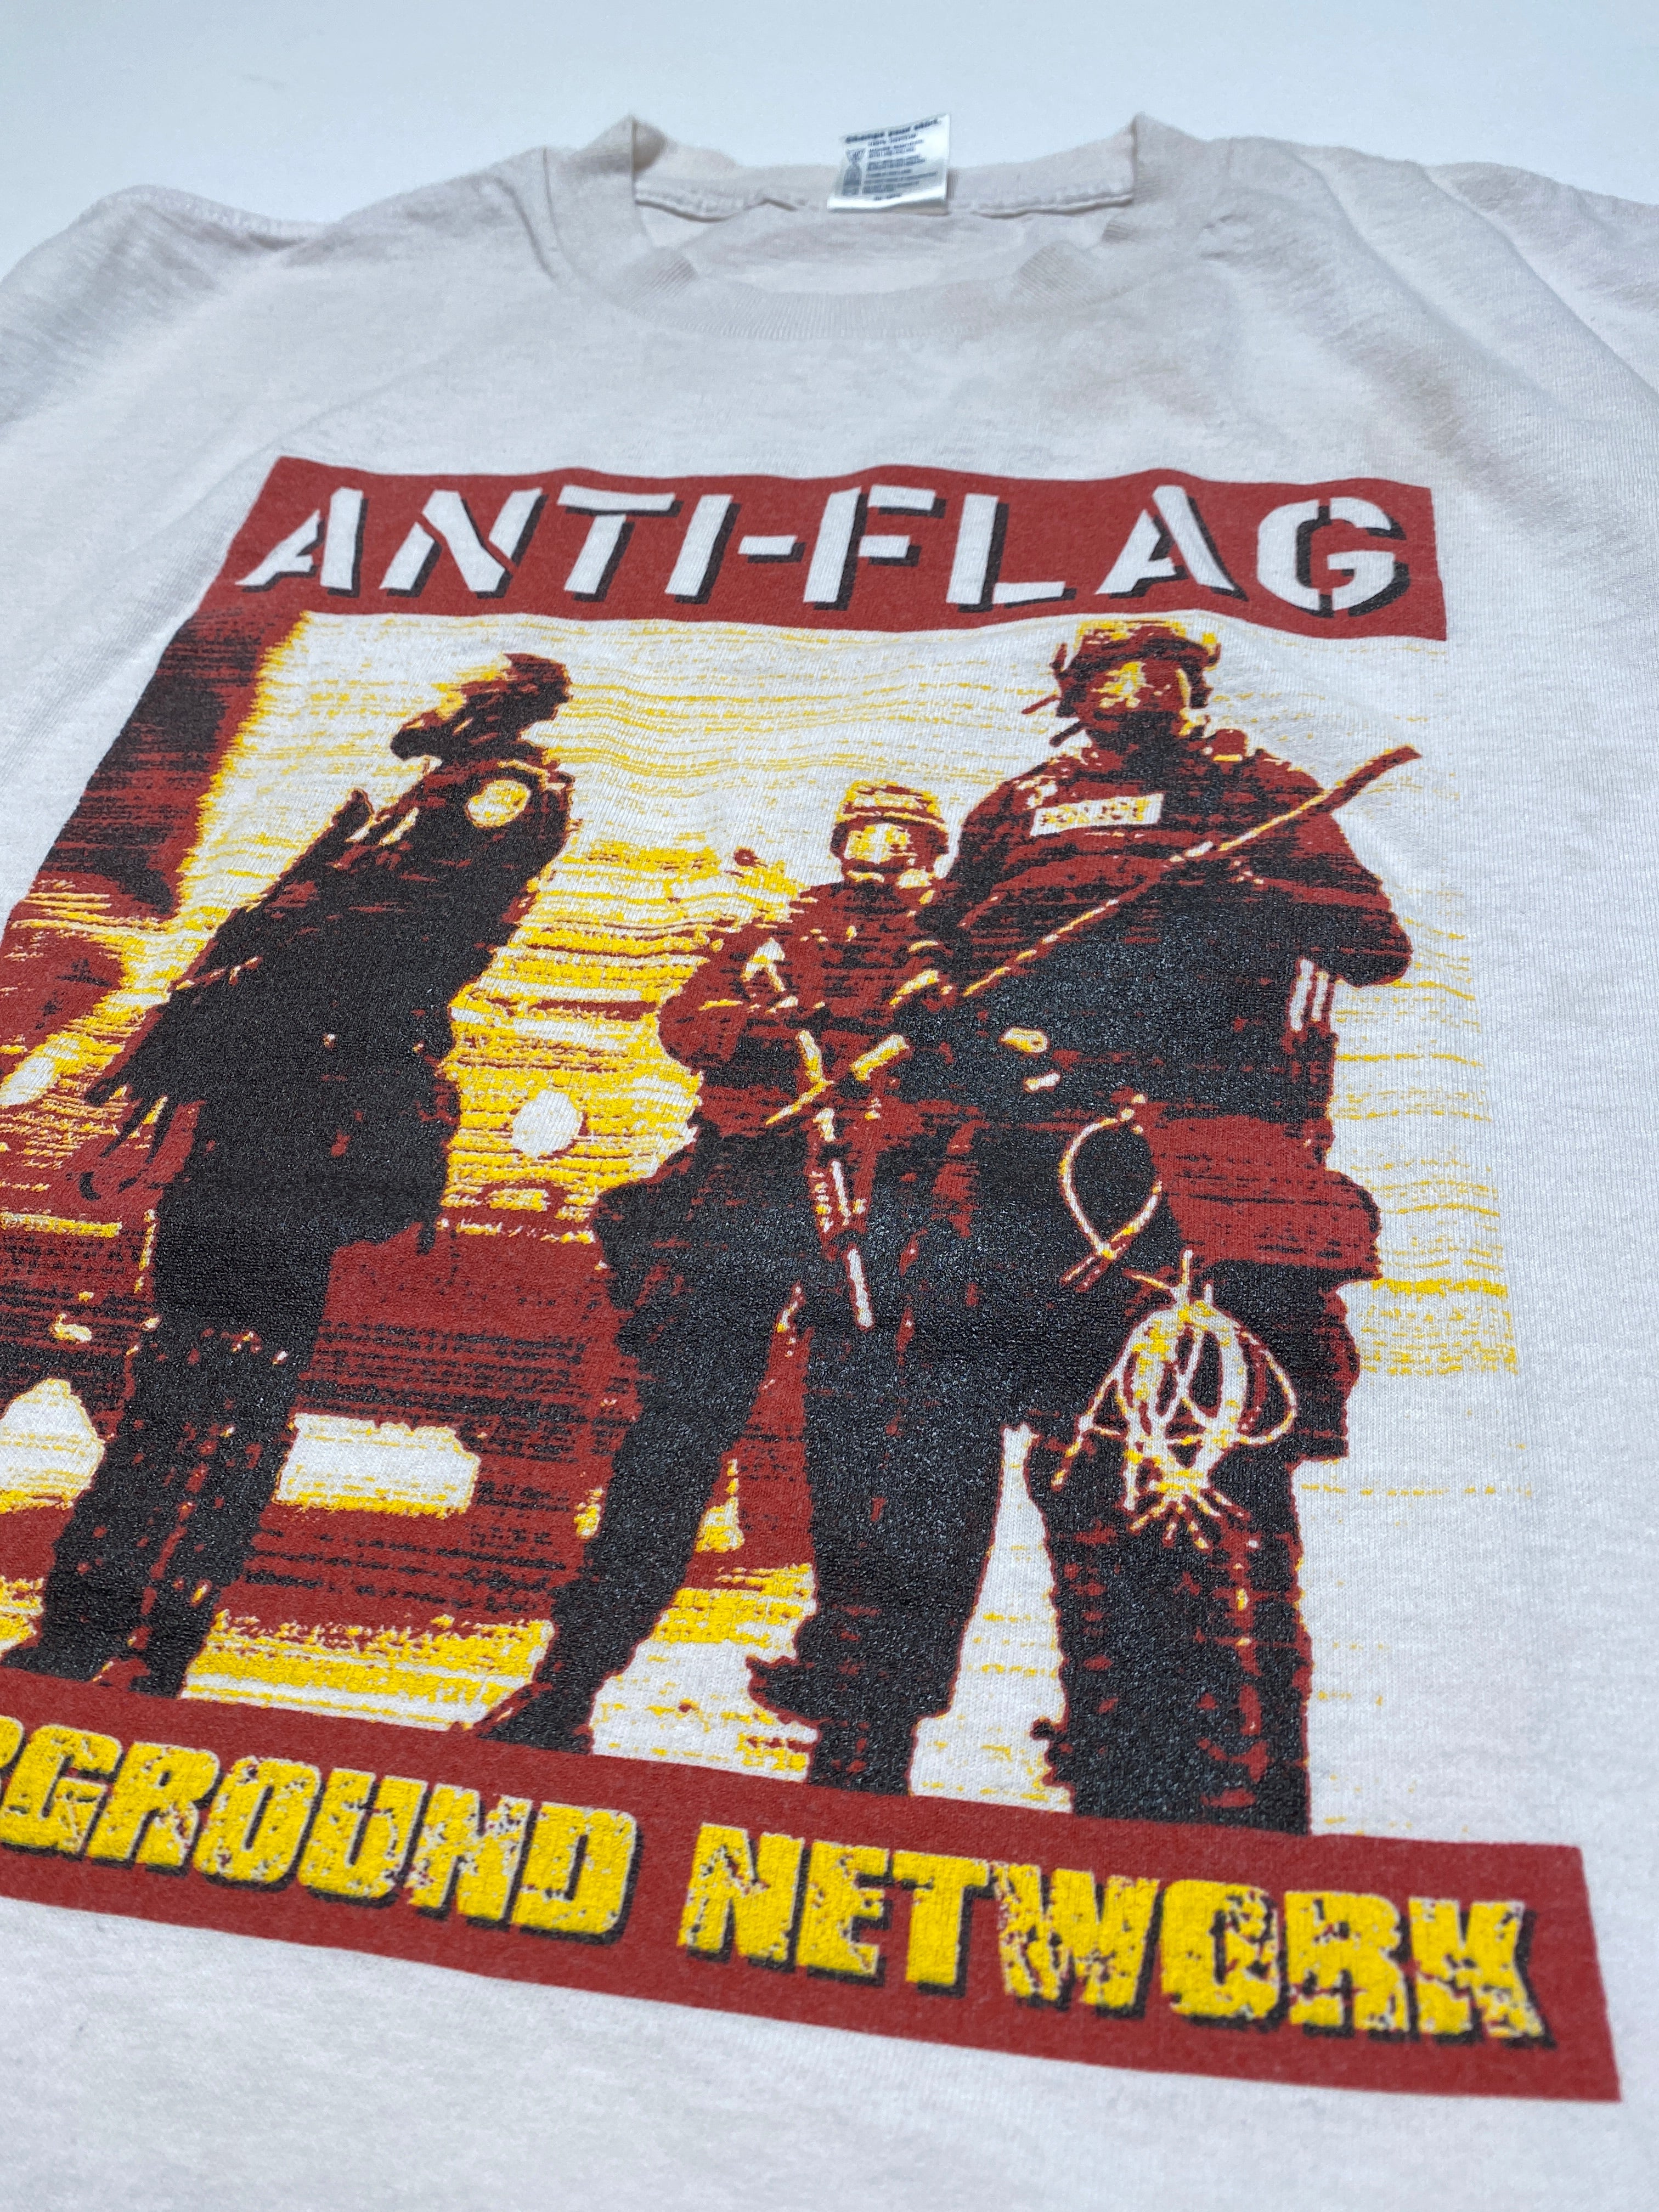 Anti-Flag - Underground Network 2001 Tour Shirt Size XL